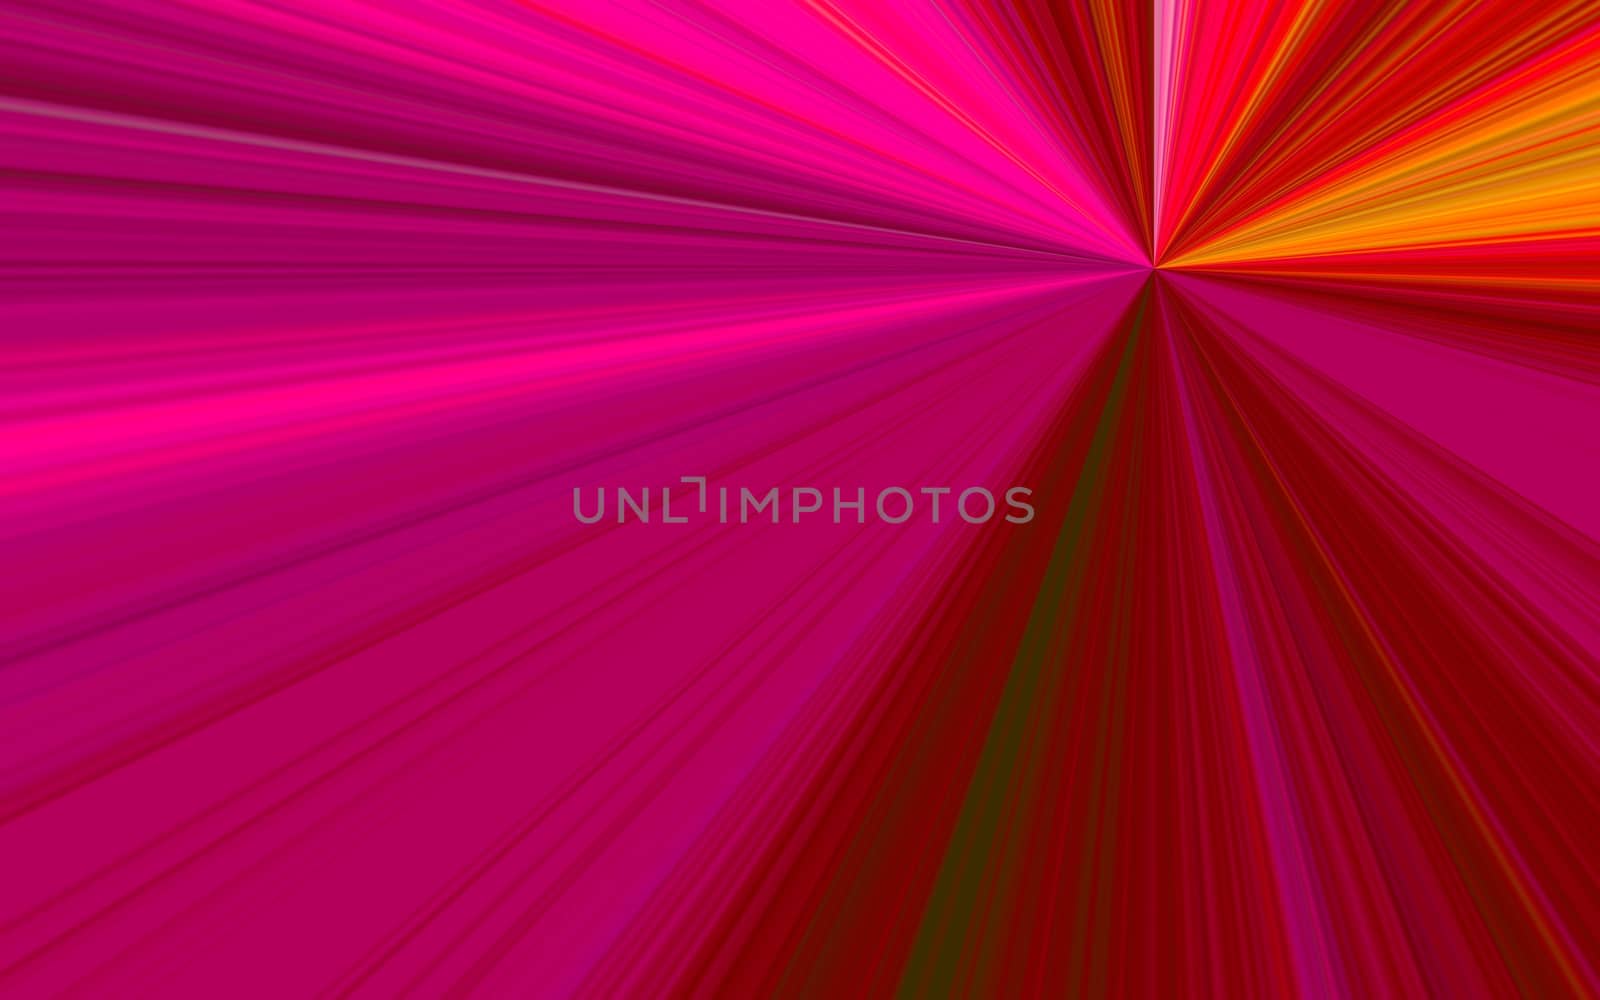 illustration of red sunburst - digital high resolution by a3701027